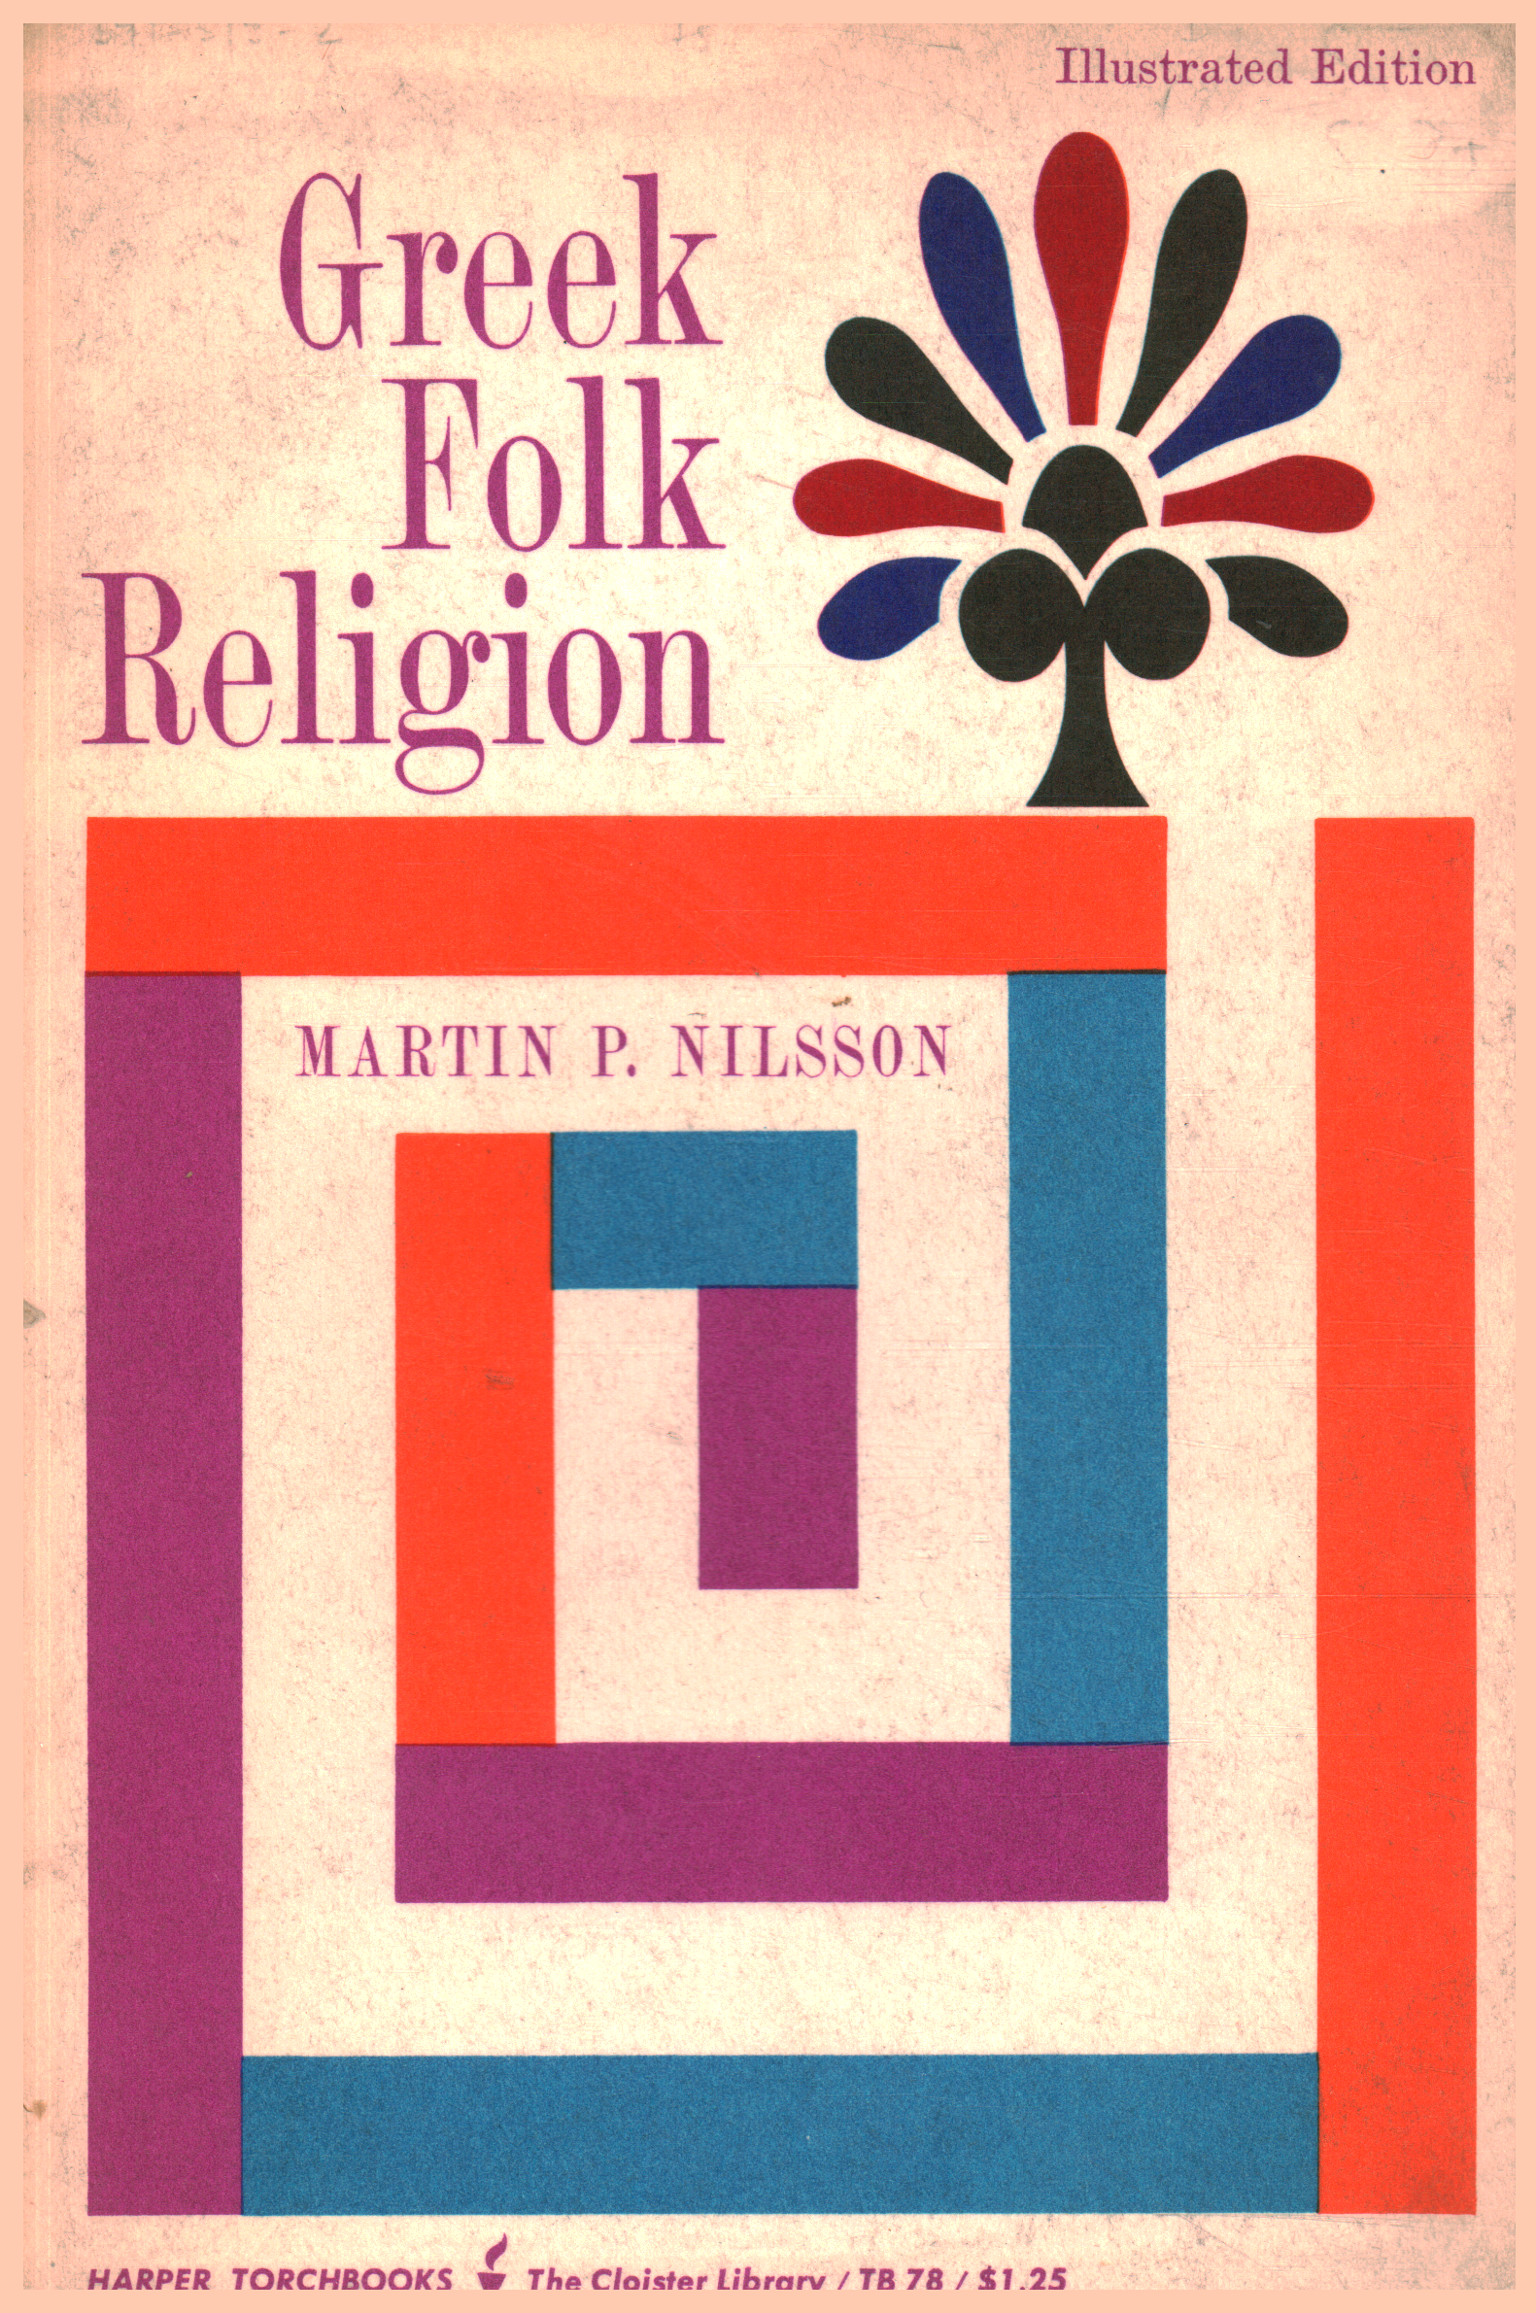 Greek folk religion, Martin P. Nilsson